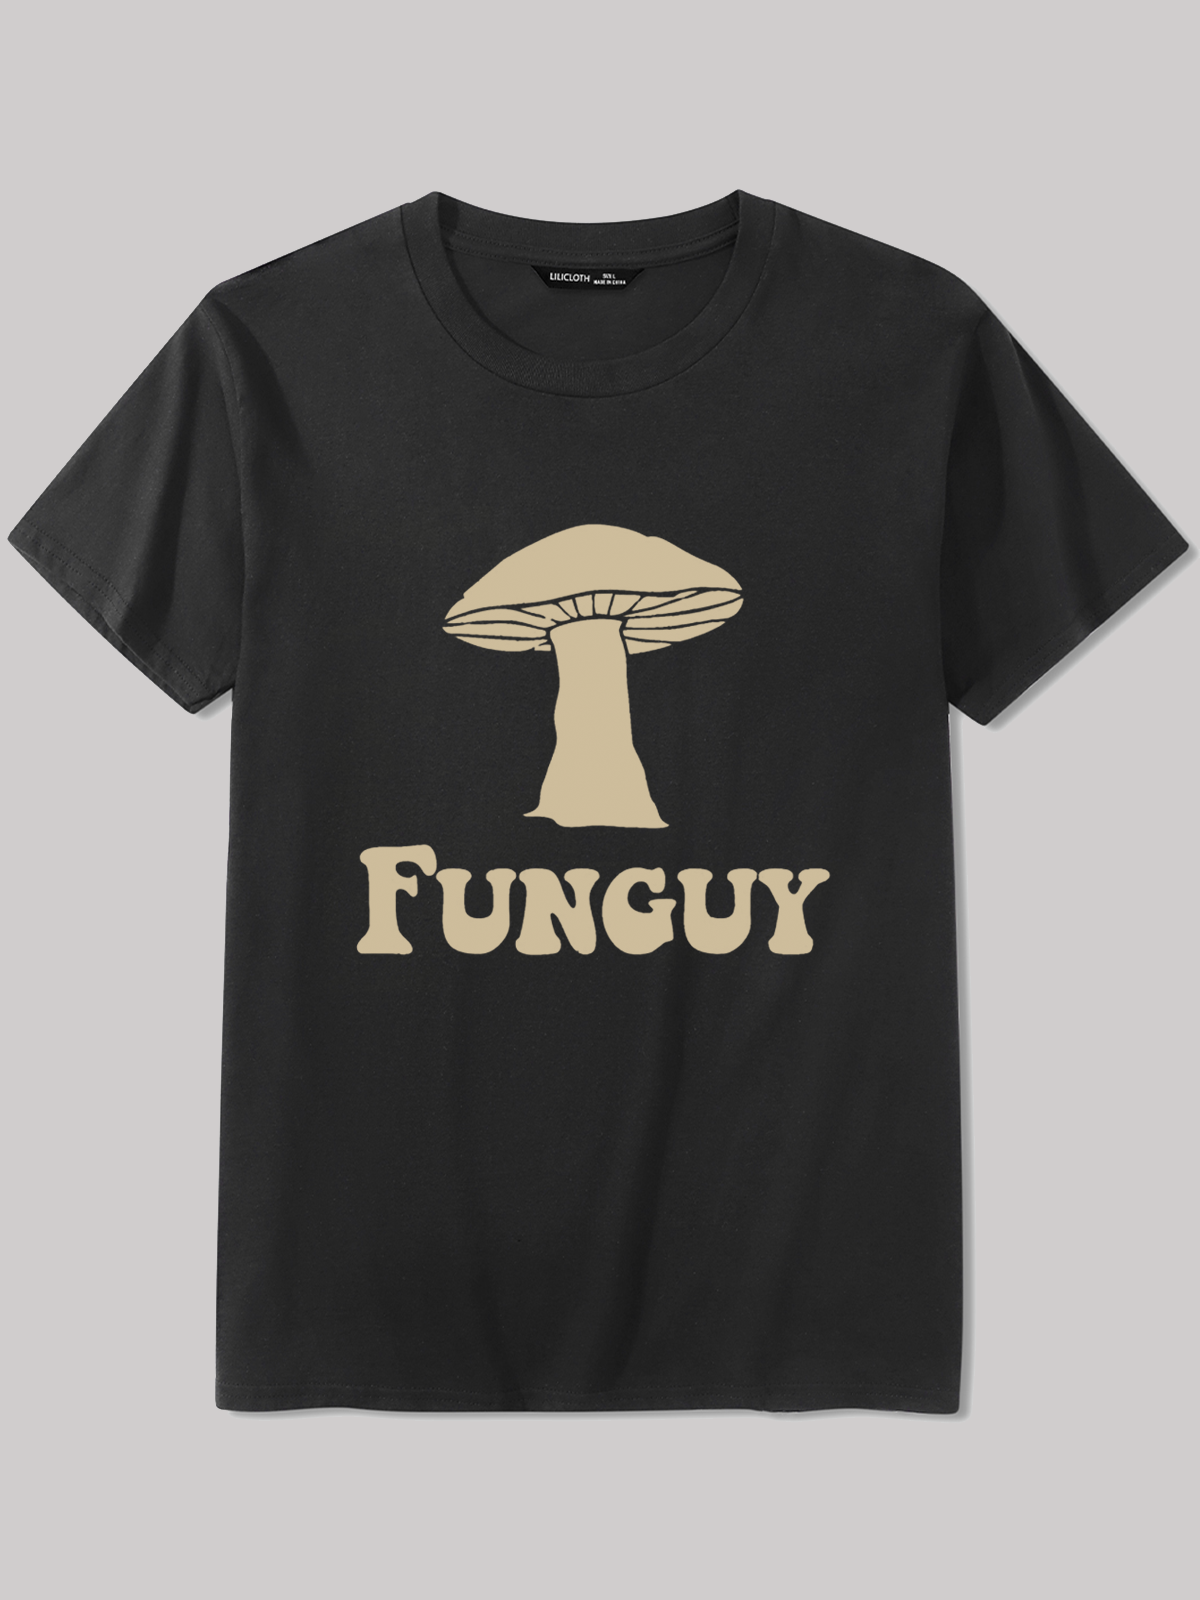 Men's Fungi Fun Guy Funny Cotton Loose Casual Crew Neck T-Shirt